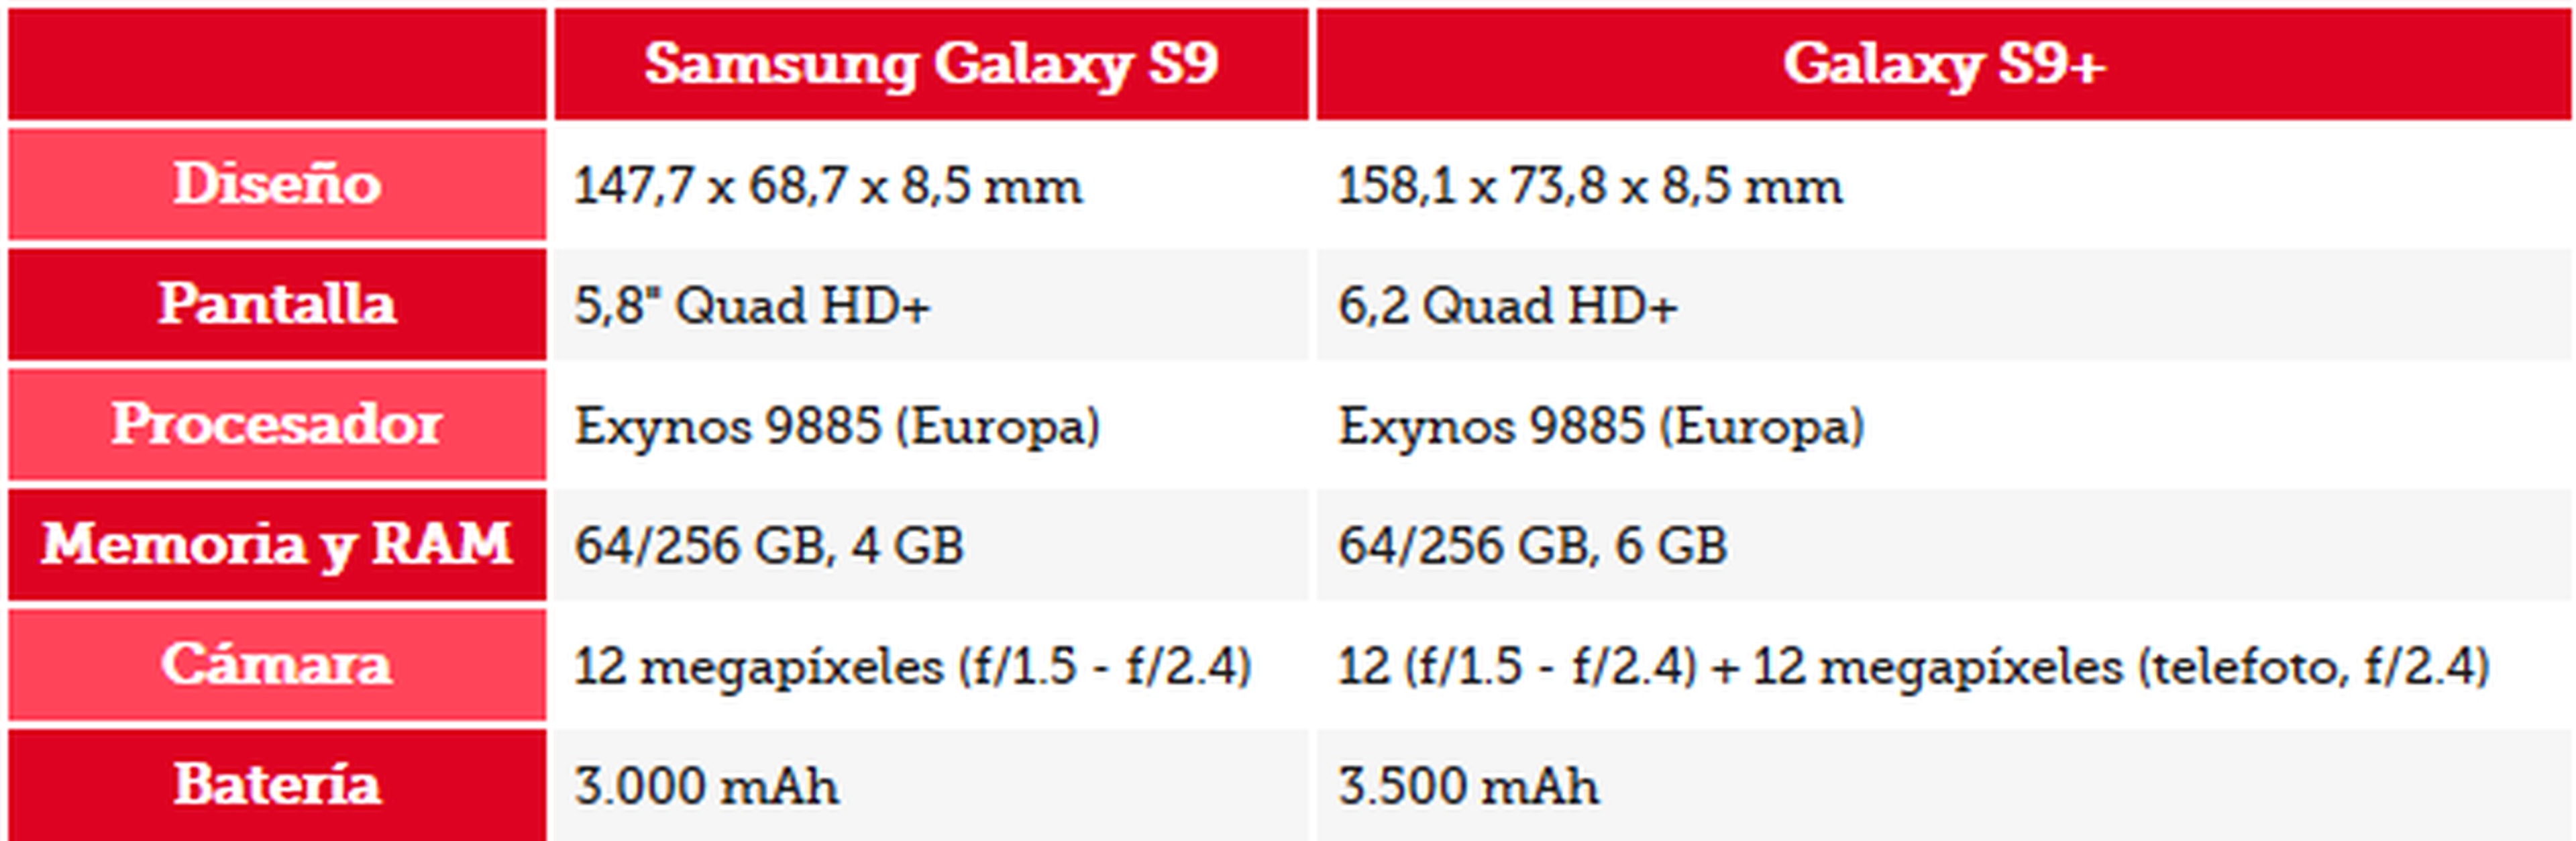 Ficha técnica Samsung S9 y S9+